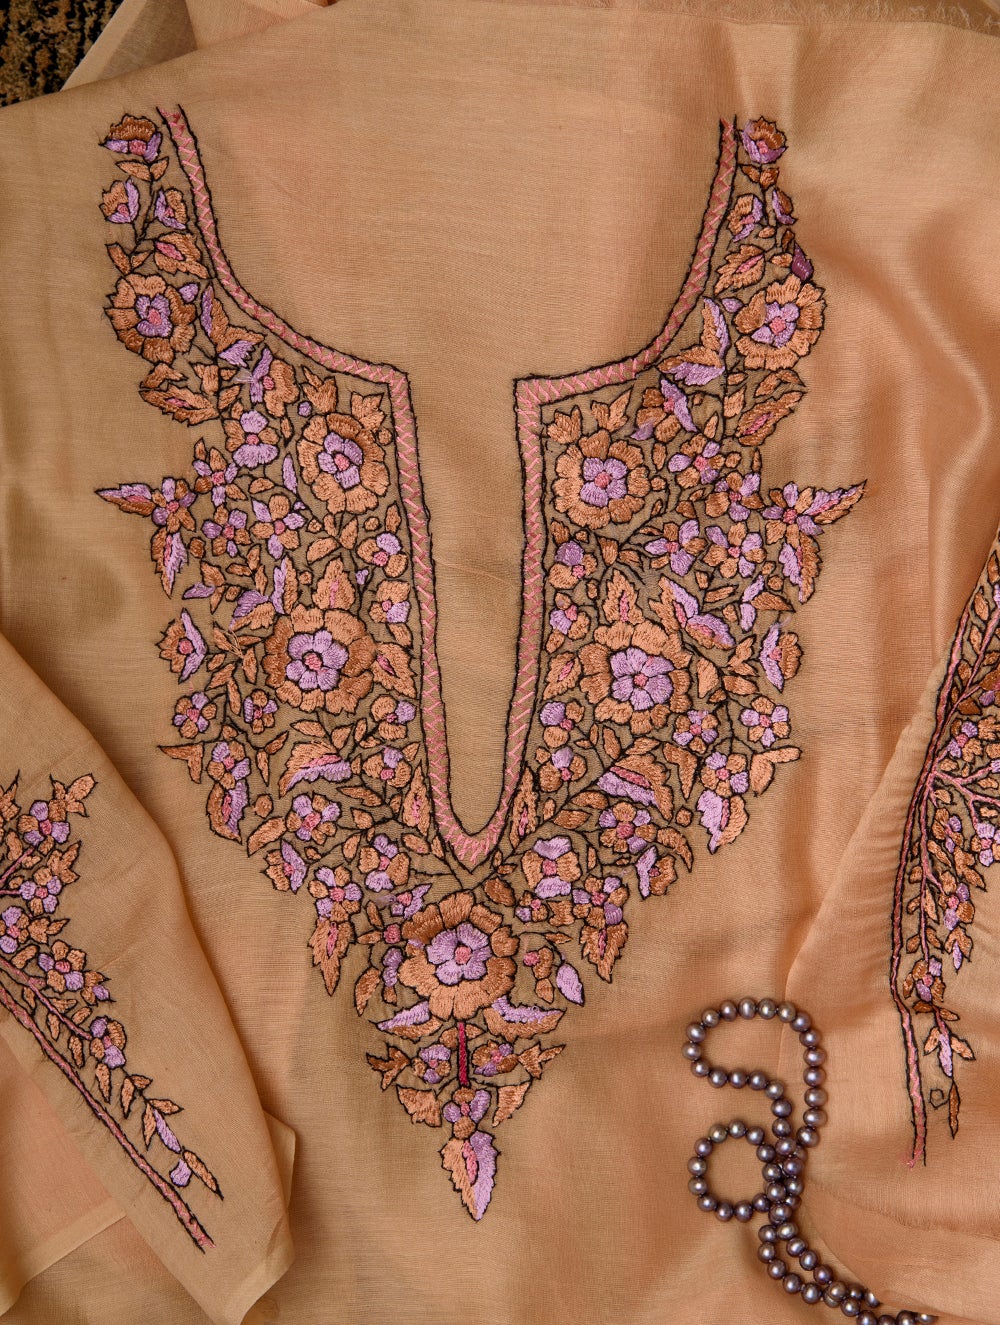 Load image into Gallery viewer, Exclusive, Fine Kashmiri Hand Embroidered Chanderi Kurta / Dress Fabric - Beige